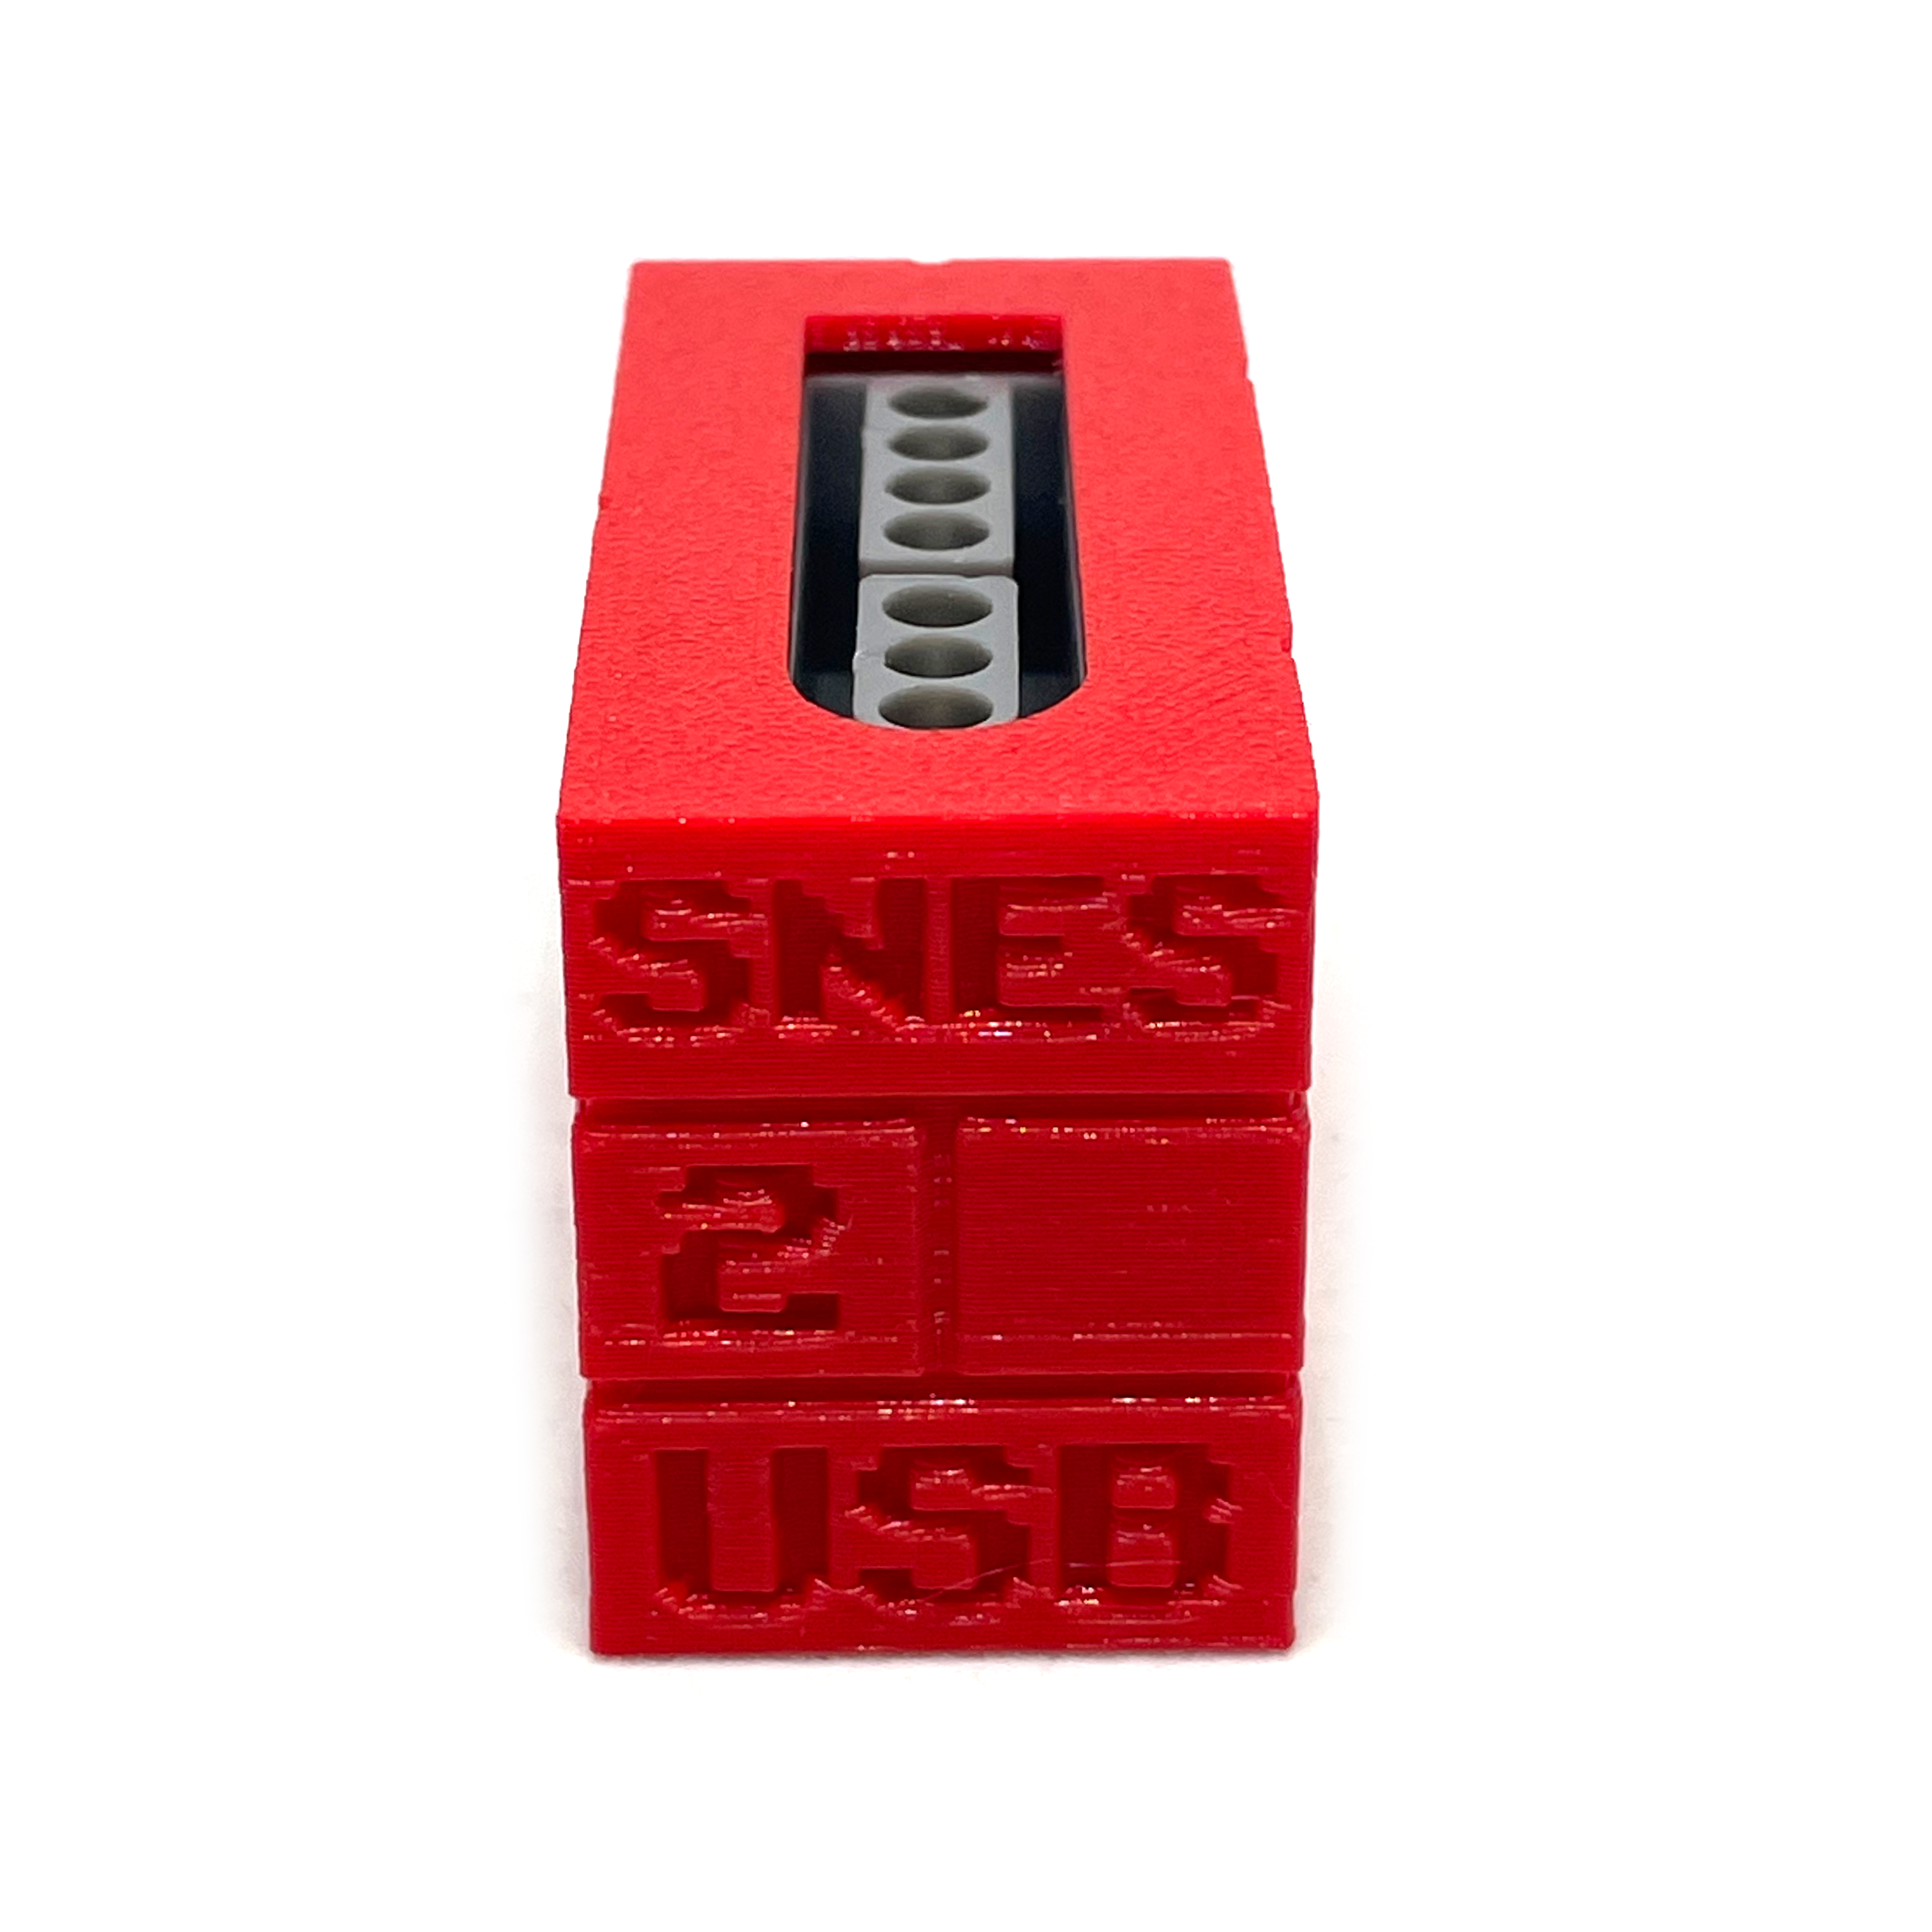 Super Nintendo to USB Controller Adapter (SNES2USB)